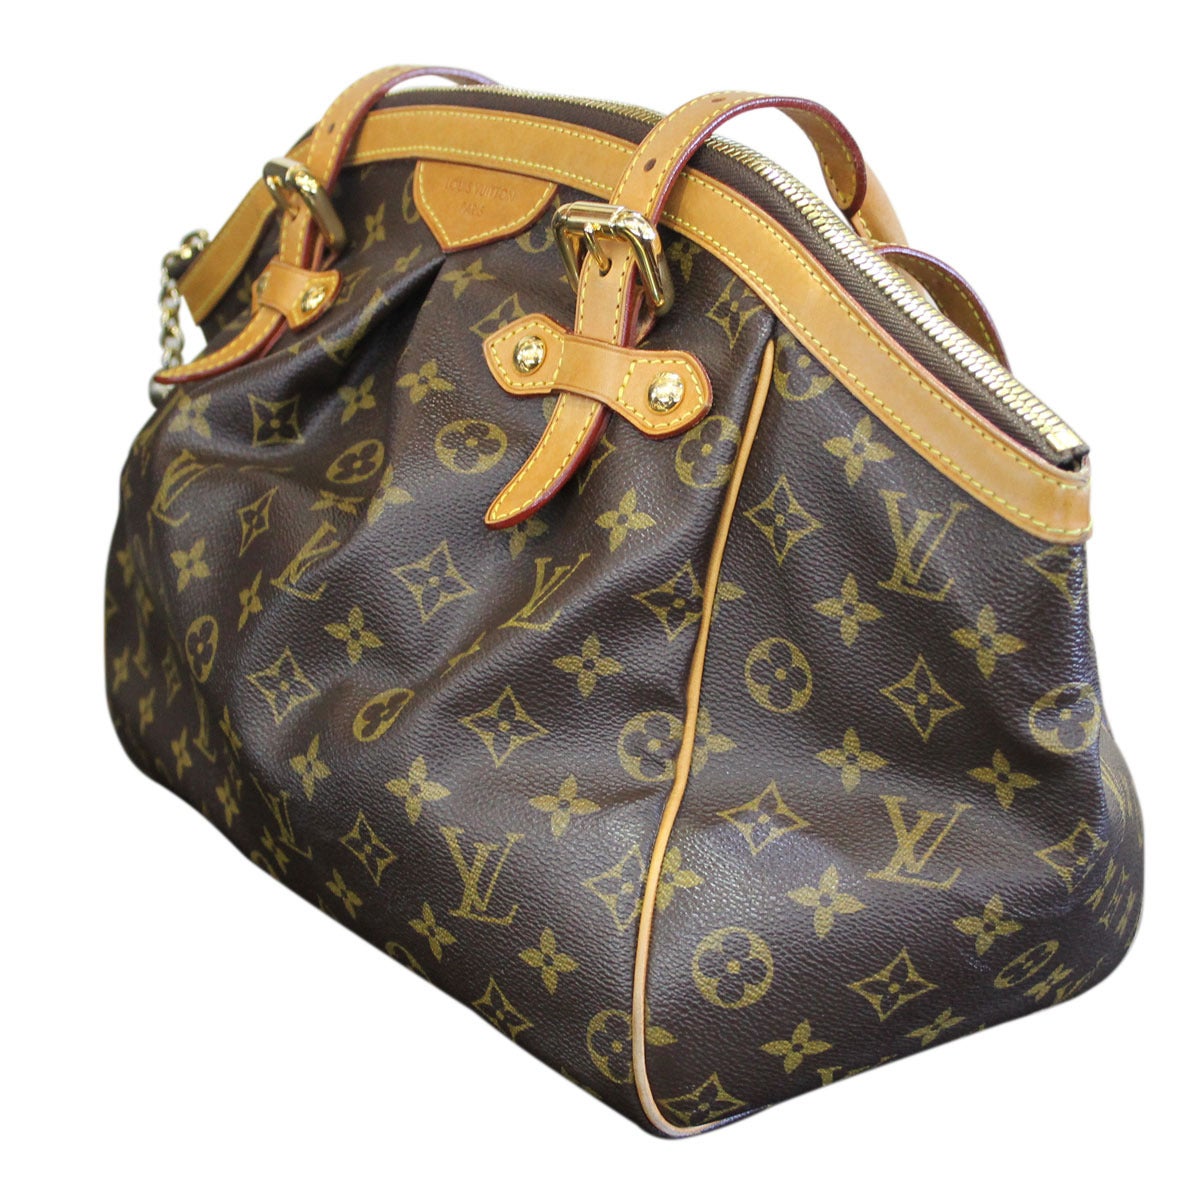 Louis Vuitton Tivoli GM Monogram Canvas Shoulder Bag in Box at 1stdibs